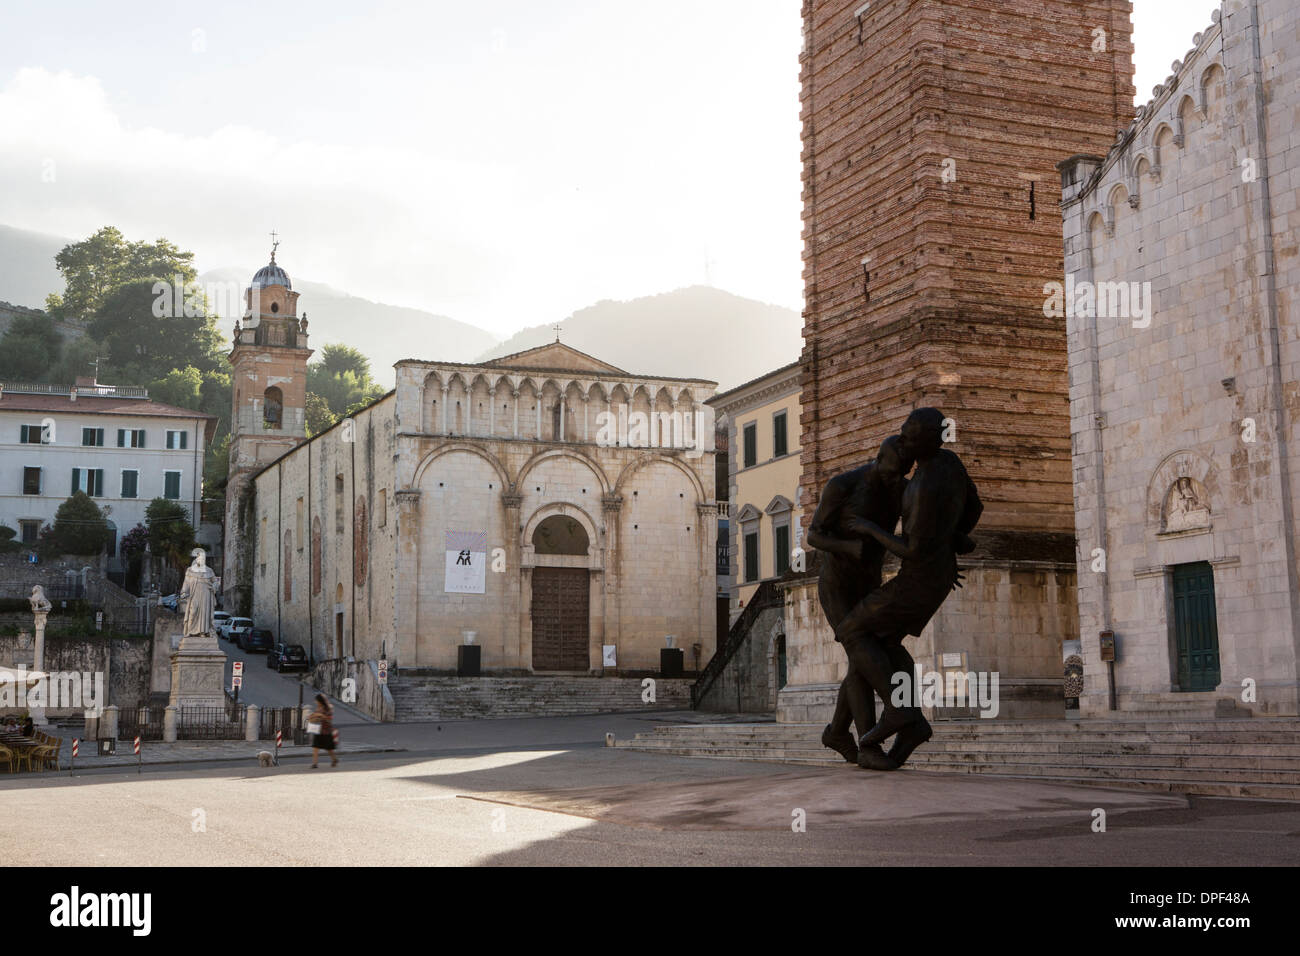 Estatua en la plaza de la ciudad, Pietrasanta, Toscana, Italia Foto de stock